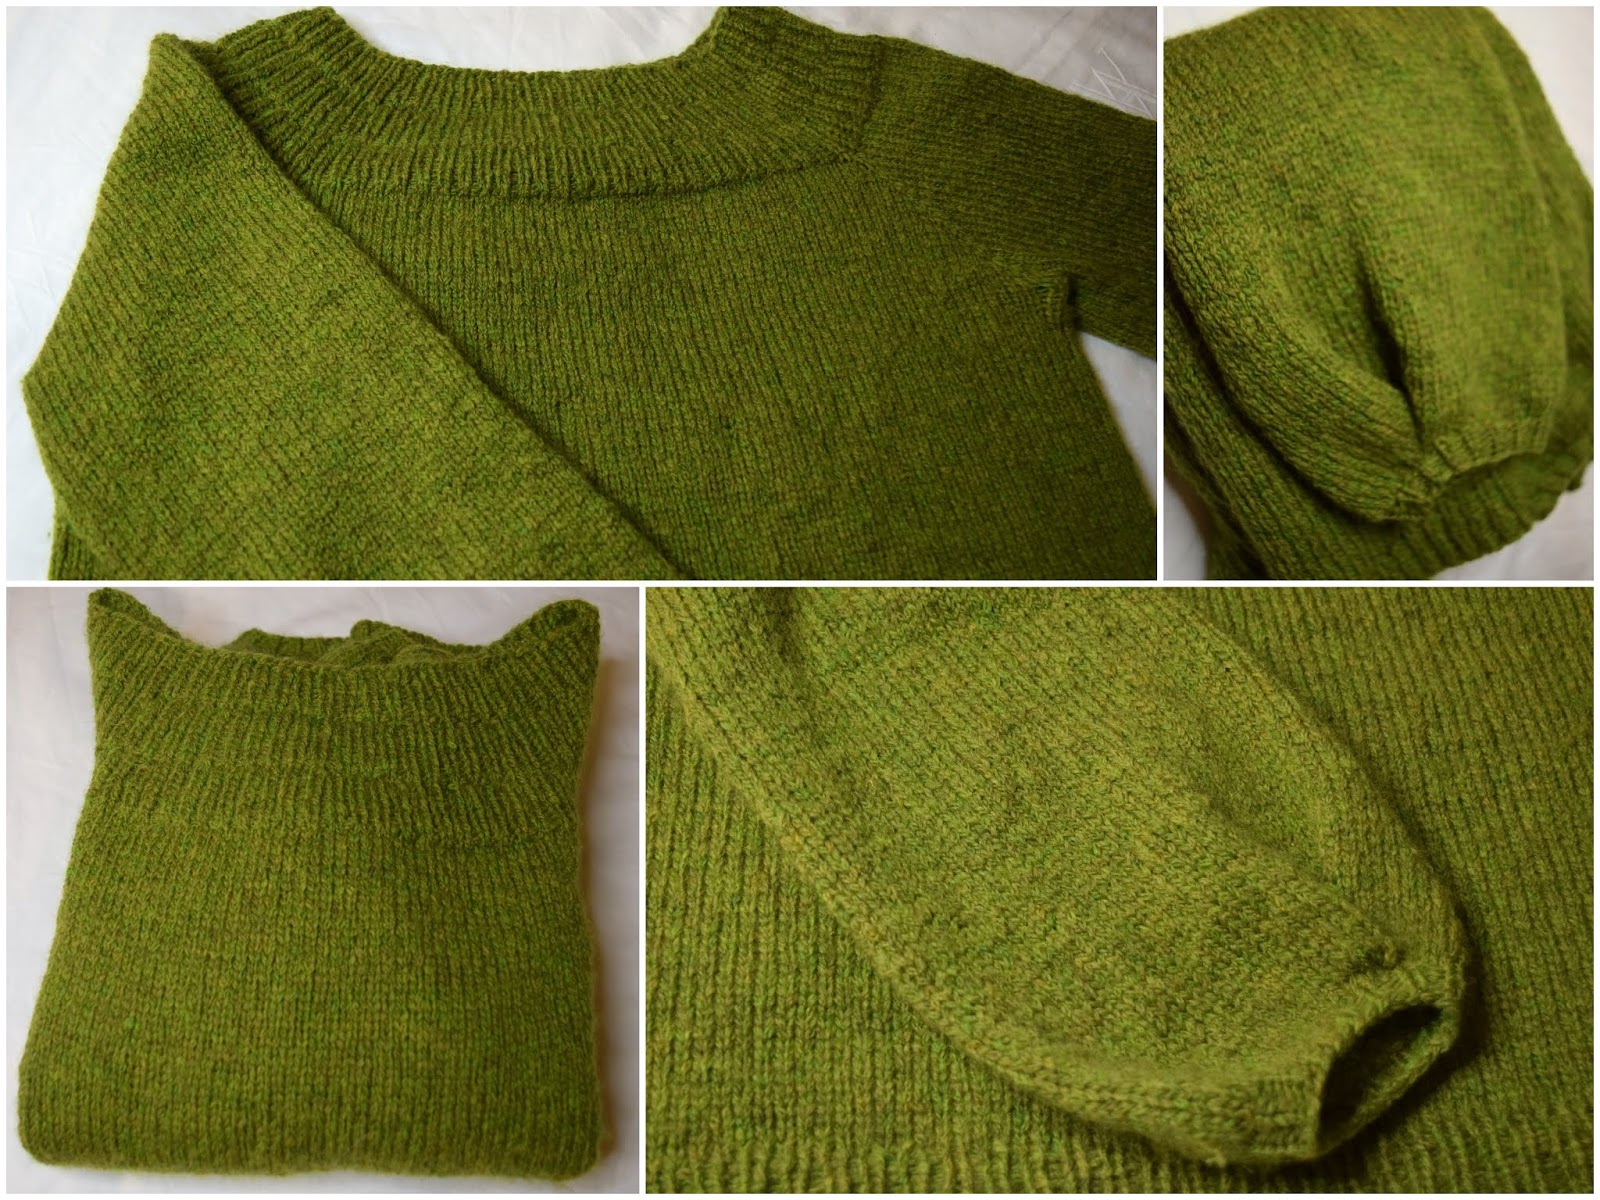 A green knit